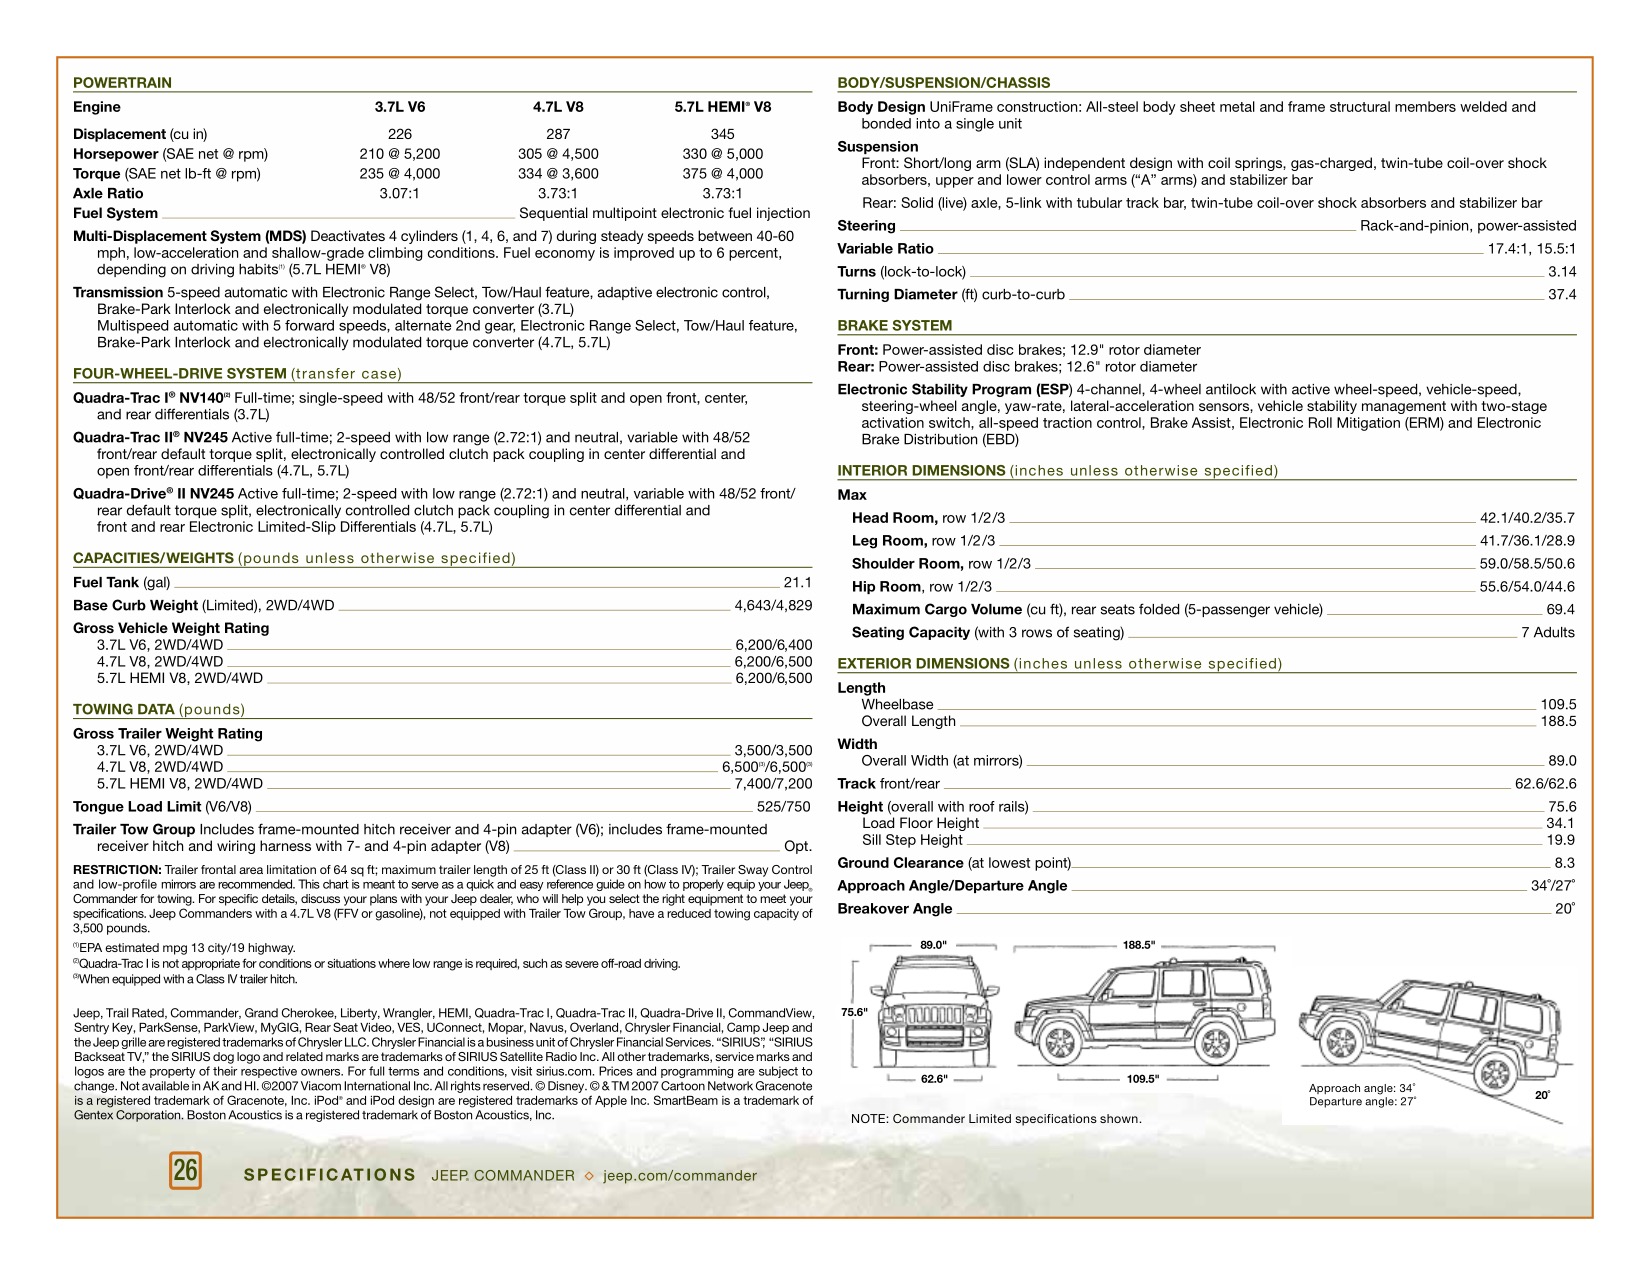 2008 Jeep Commander Brochure Page 6